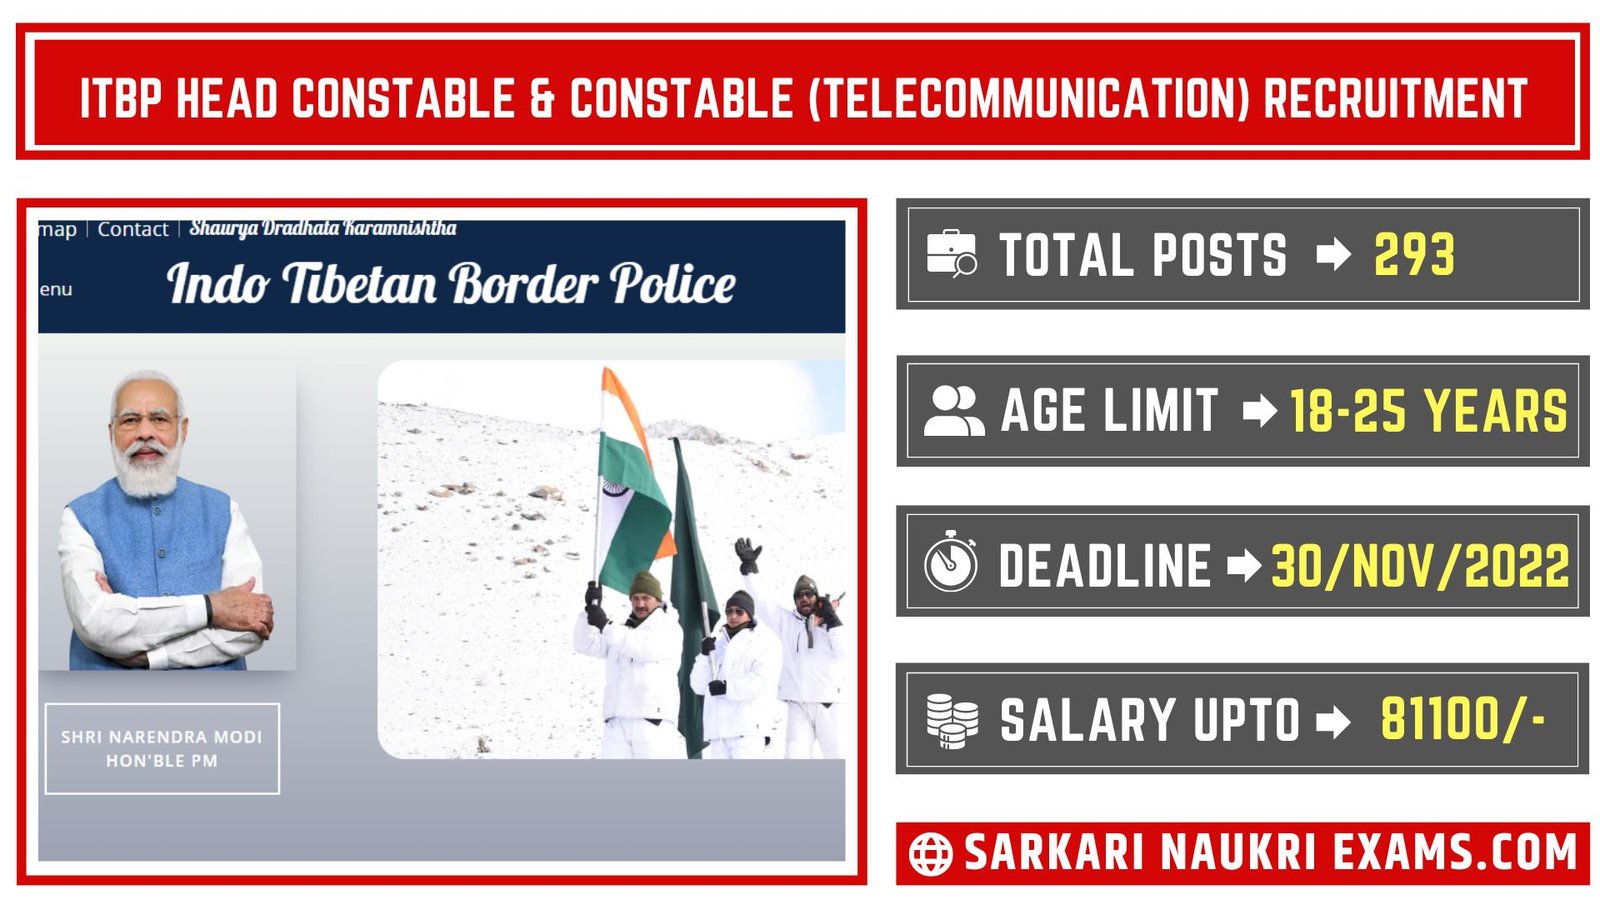 ITBP Head Constable & Constable (Telecommunication) Recruitment Form 2022